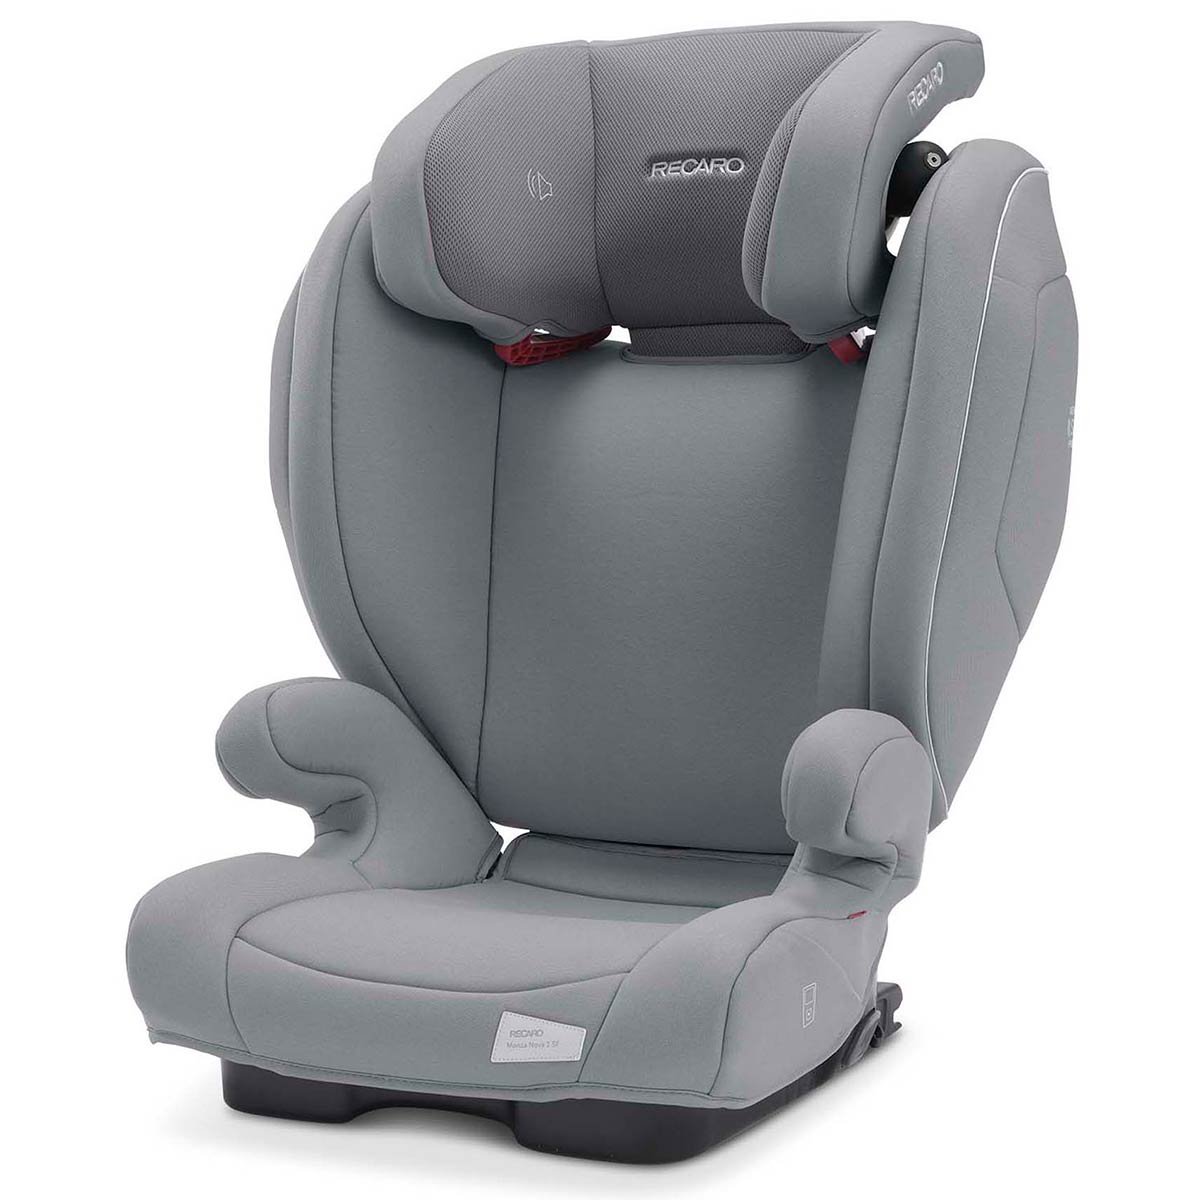 https://cdn.babyonlineshop.de/media/catalog/product/c/a/car-seat-monza-nova-2-seatfix-prime-silent-grey-1_6qv2tuiflgq905kt.jpg